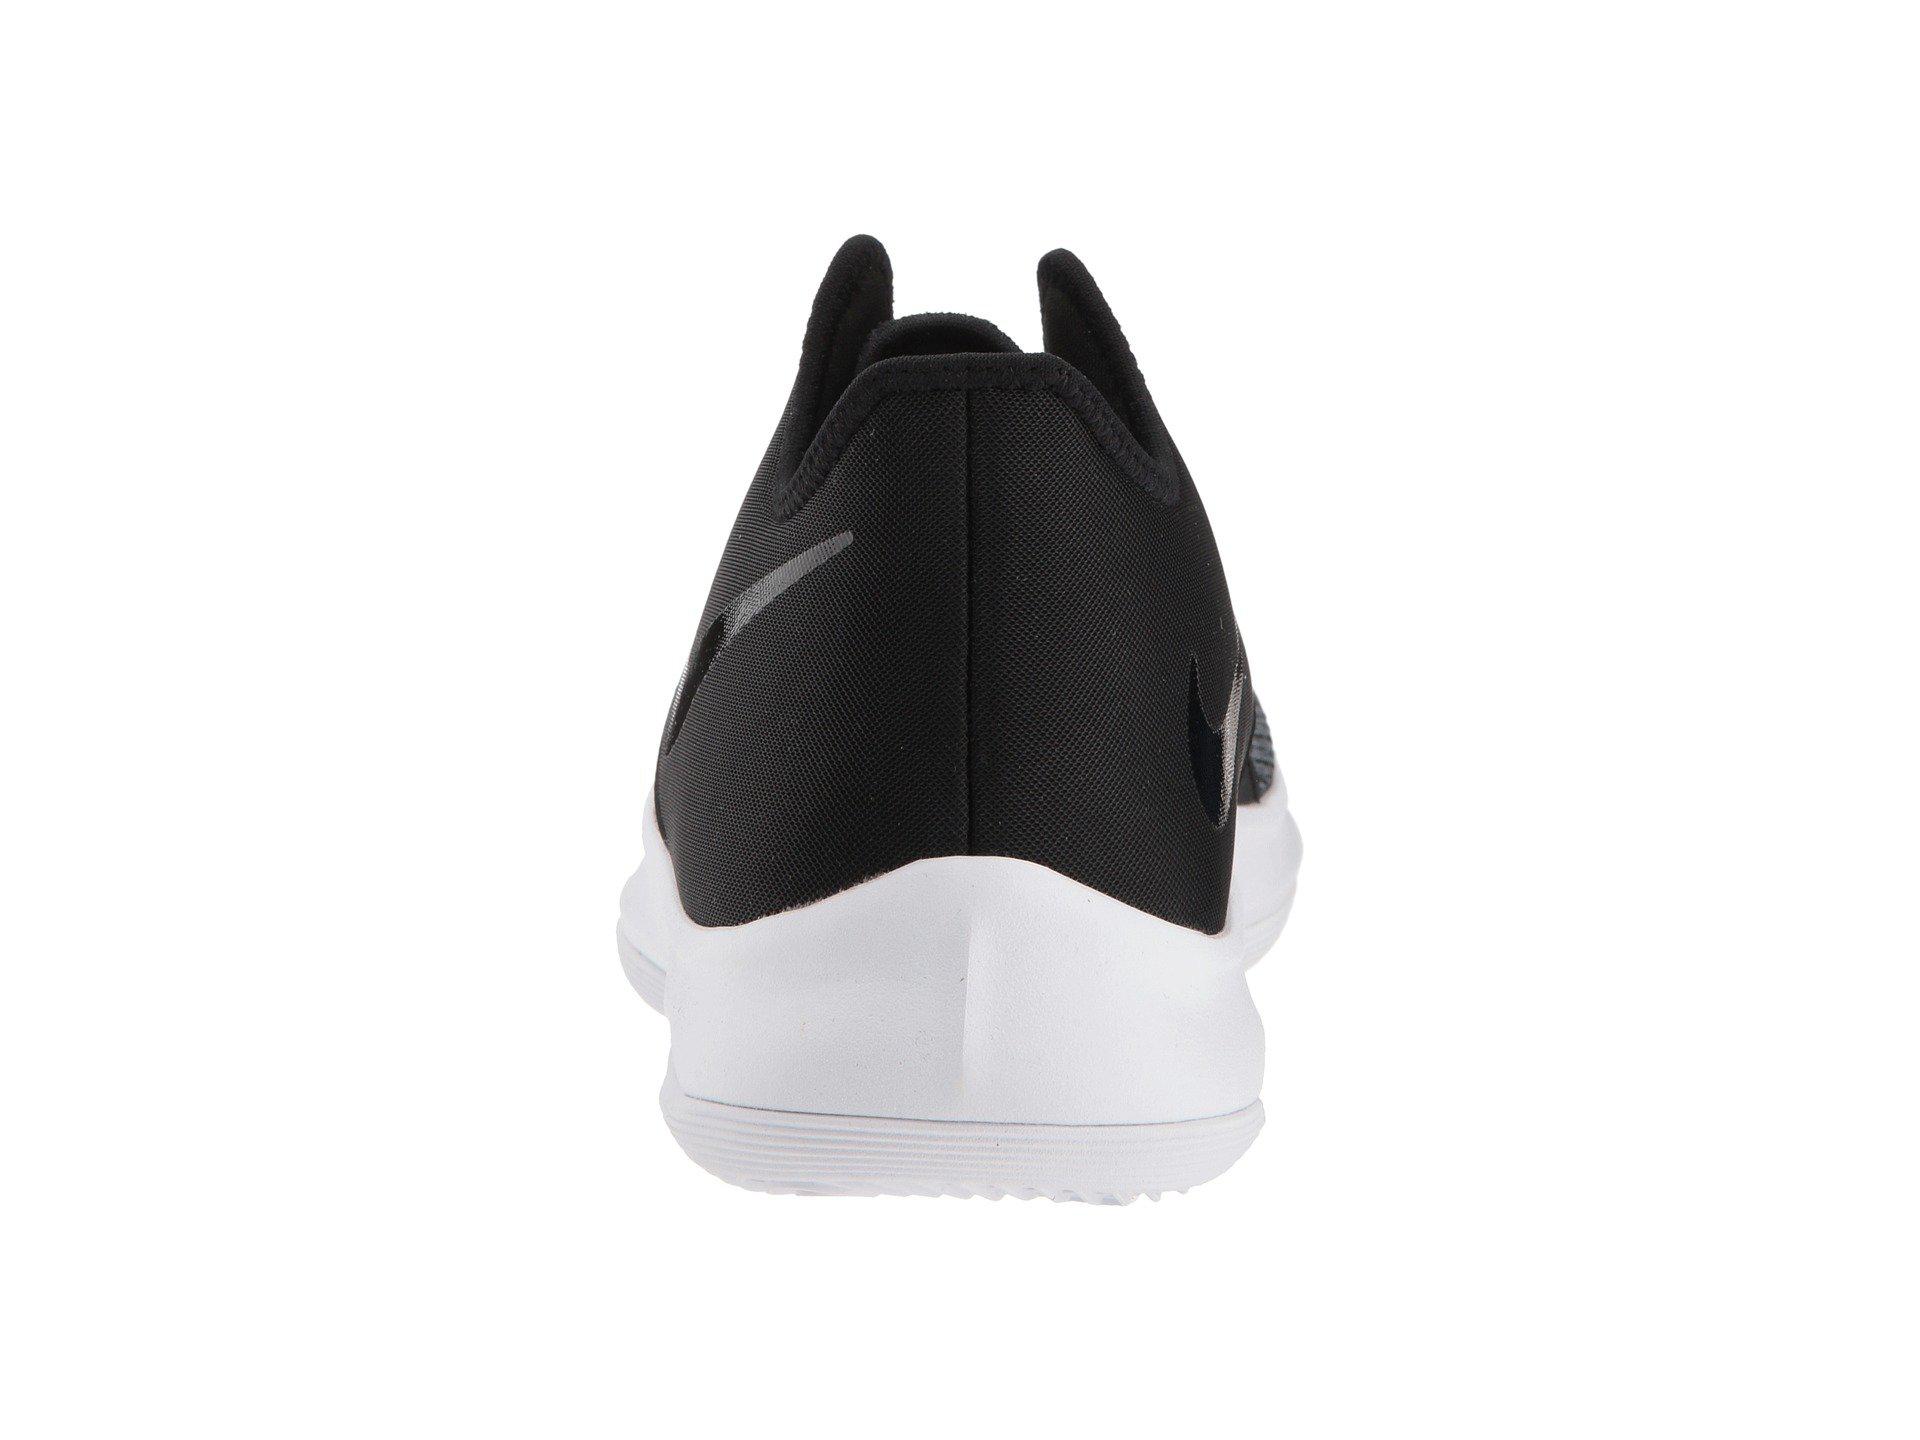 Nike Air Versitile Iii Basketball Shoe in White/Black - Dark Grey (Black)  for Men - Lyst